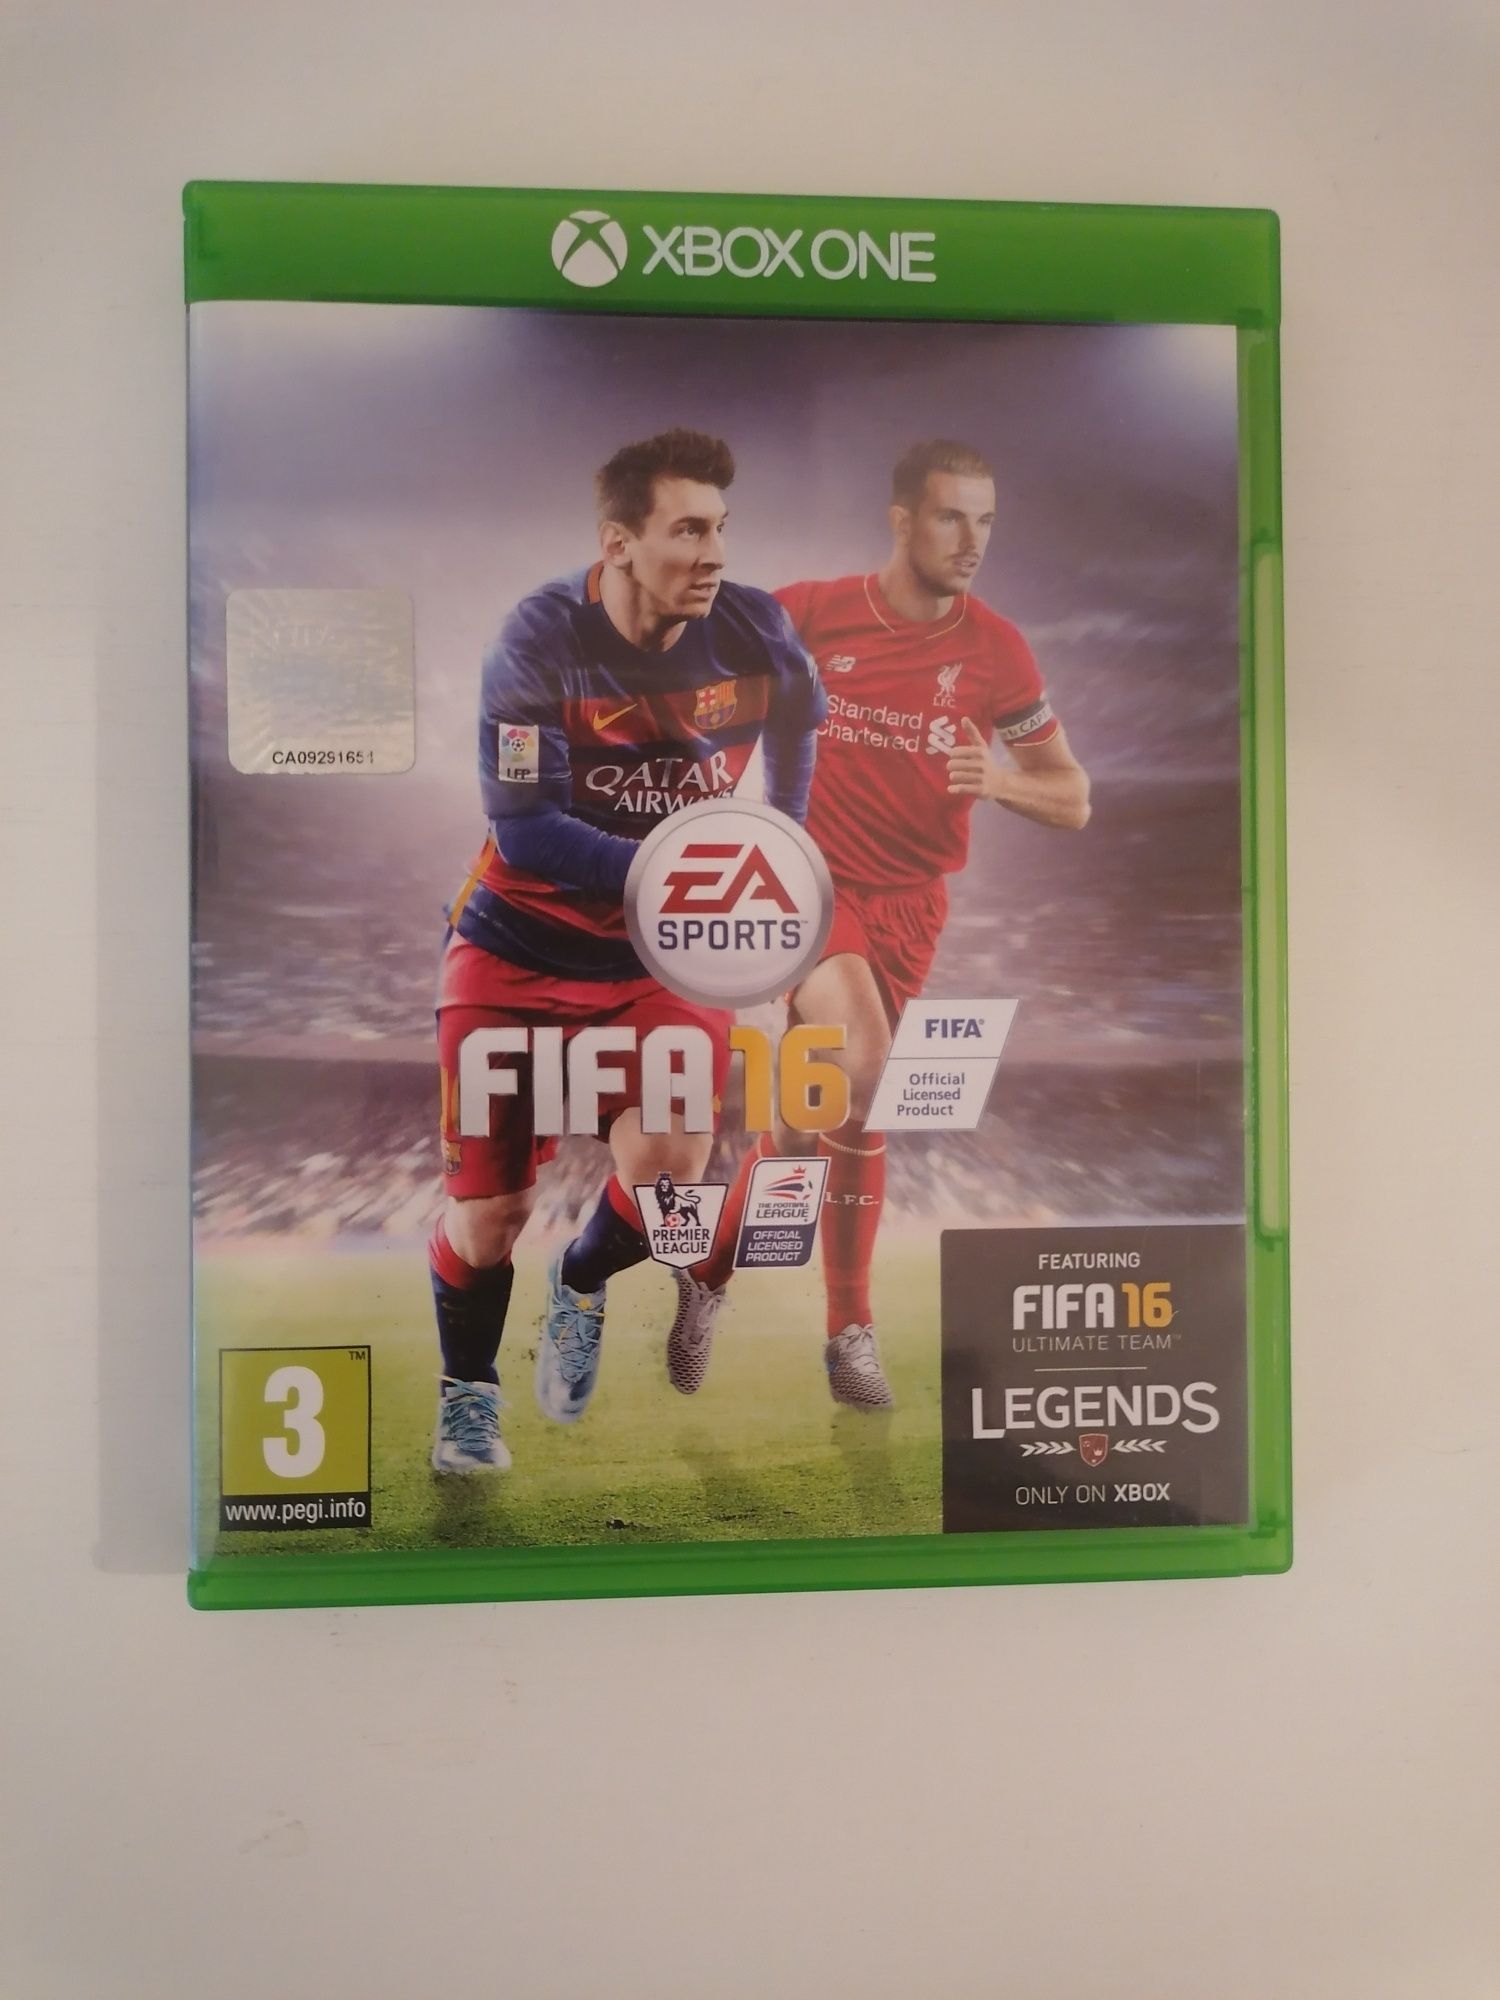 Oferta Joc FIFA 19 + FIFA 16 Xbox One